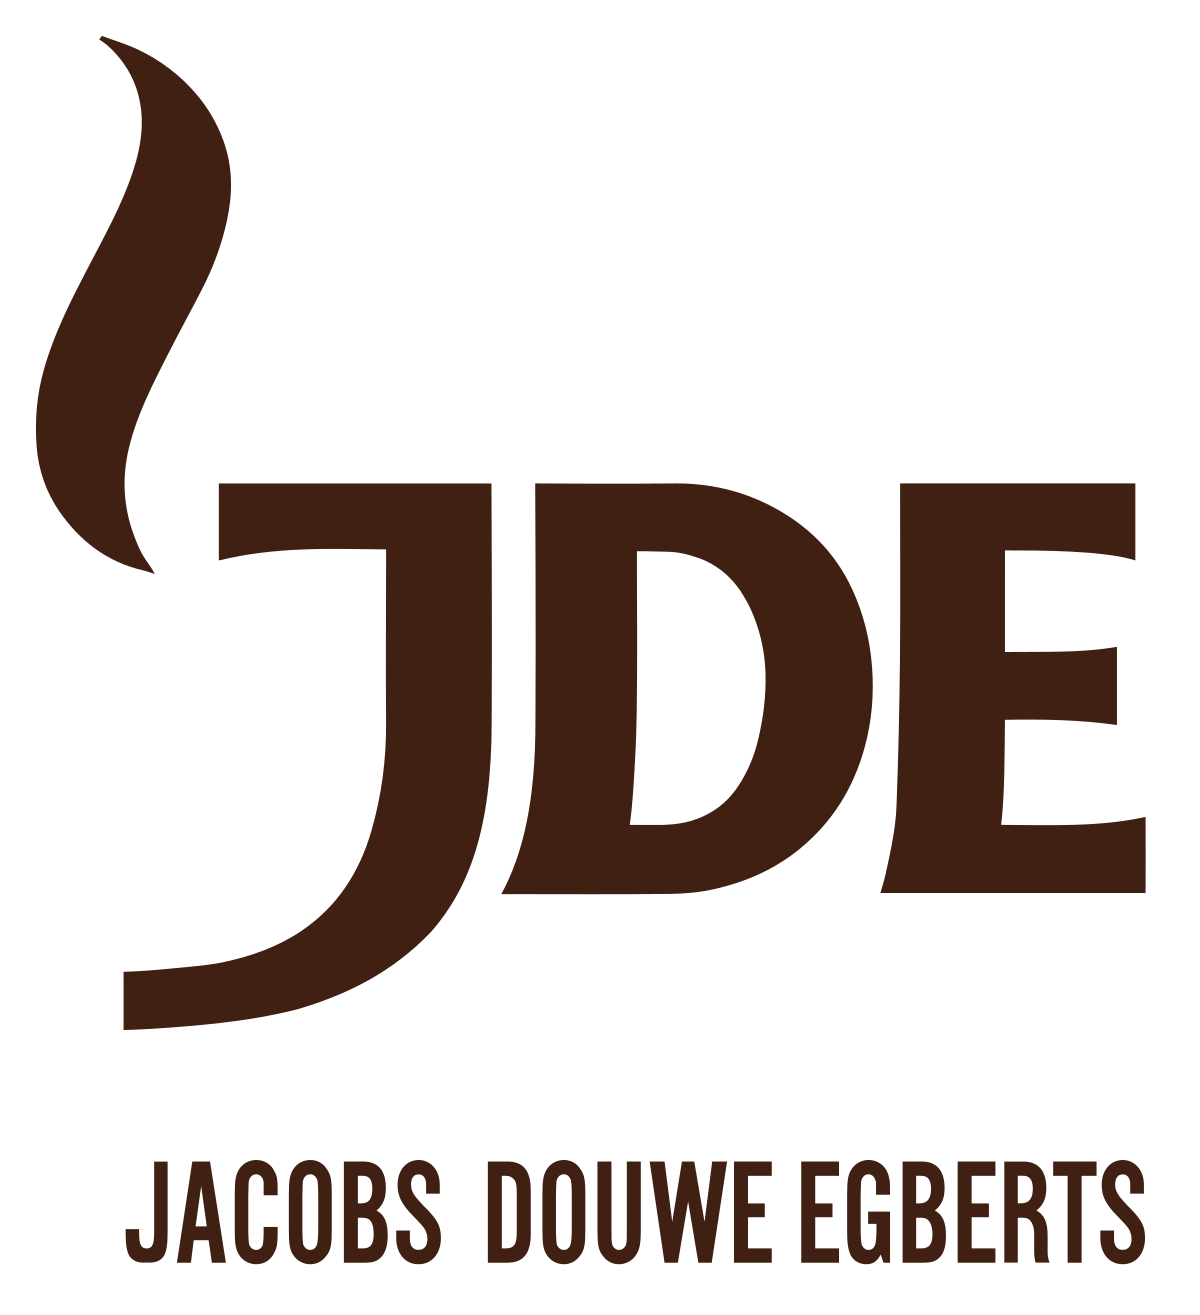 1200px-Logo_Jacobs_Douwe_Egberts.svg